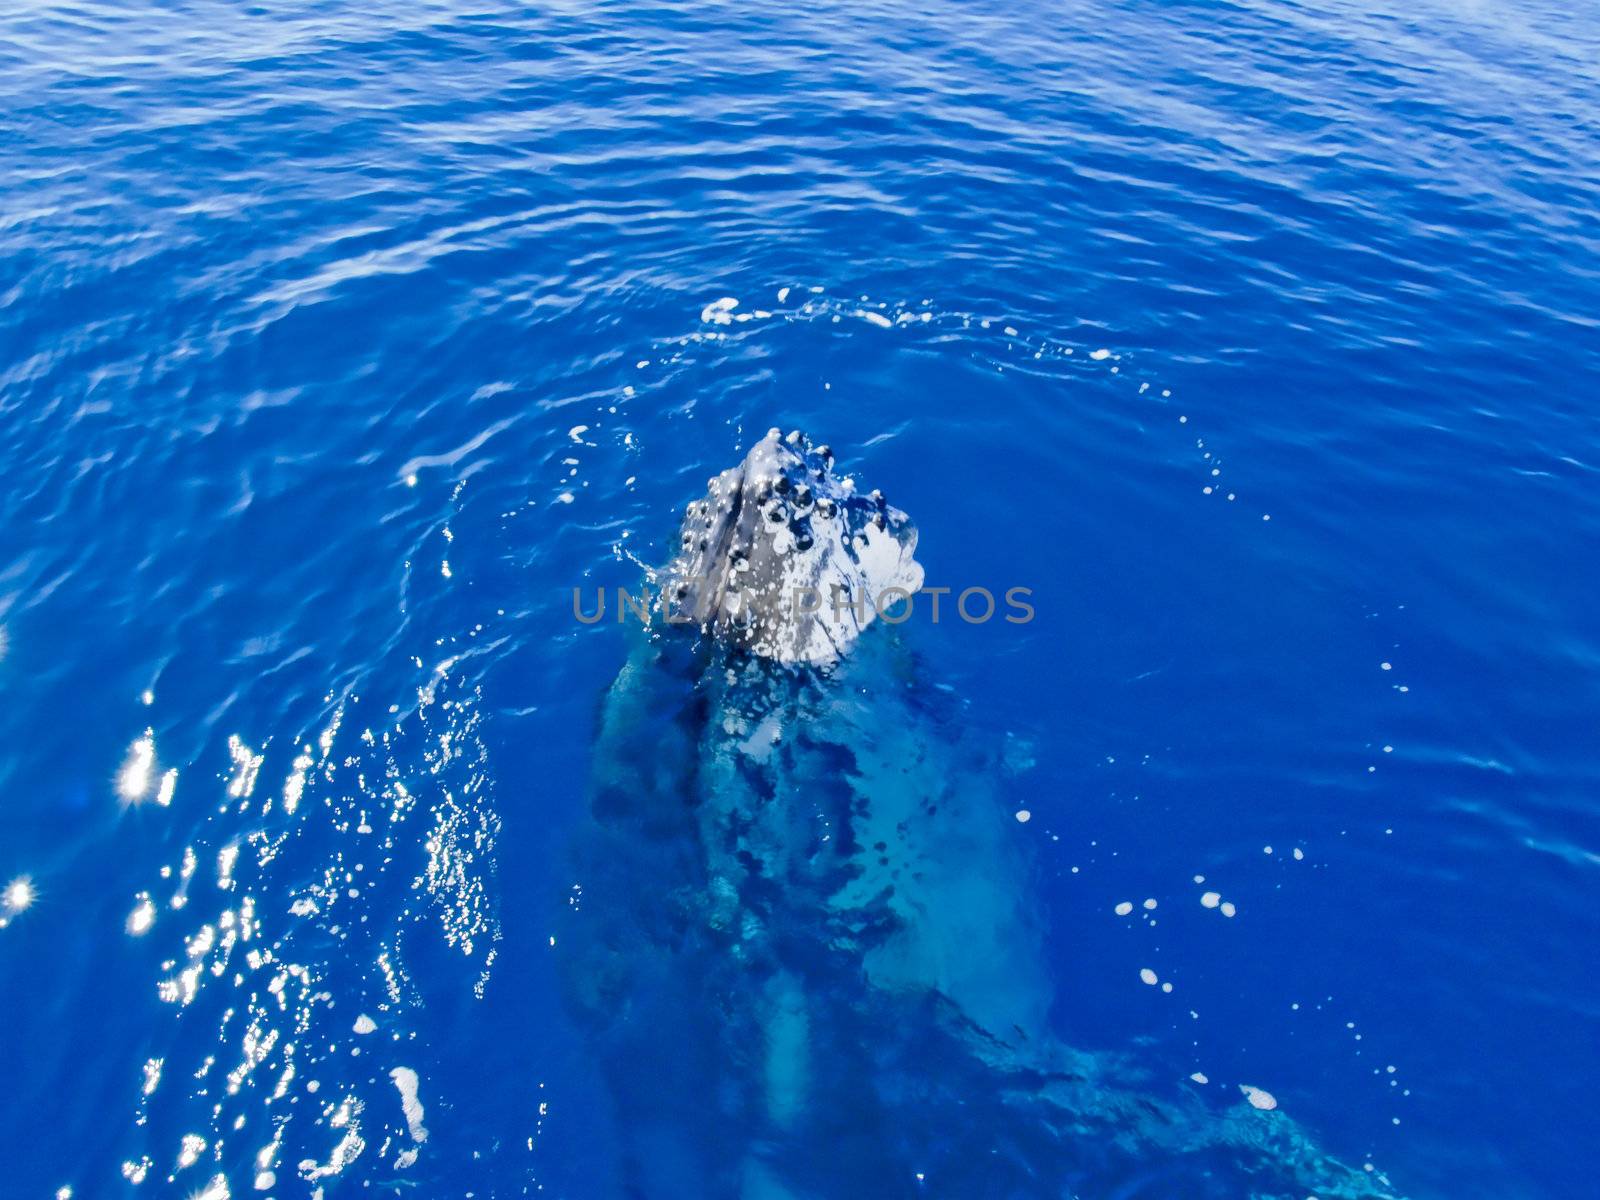 Marine Mammal - Humpback whale in the deep blue ocean